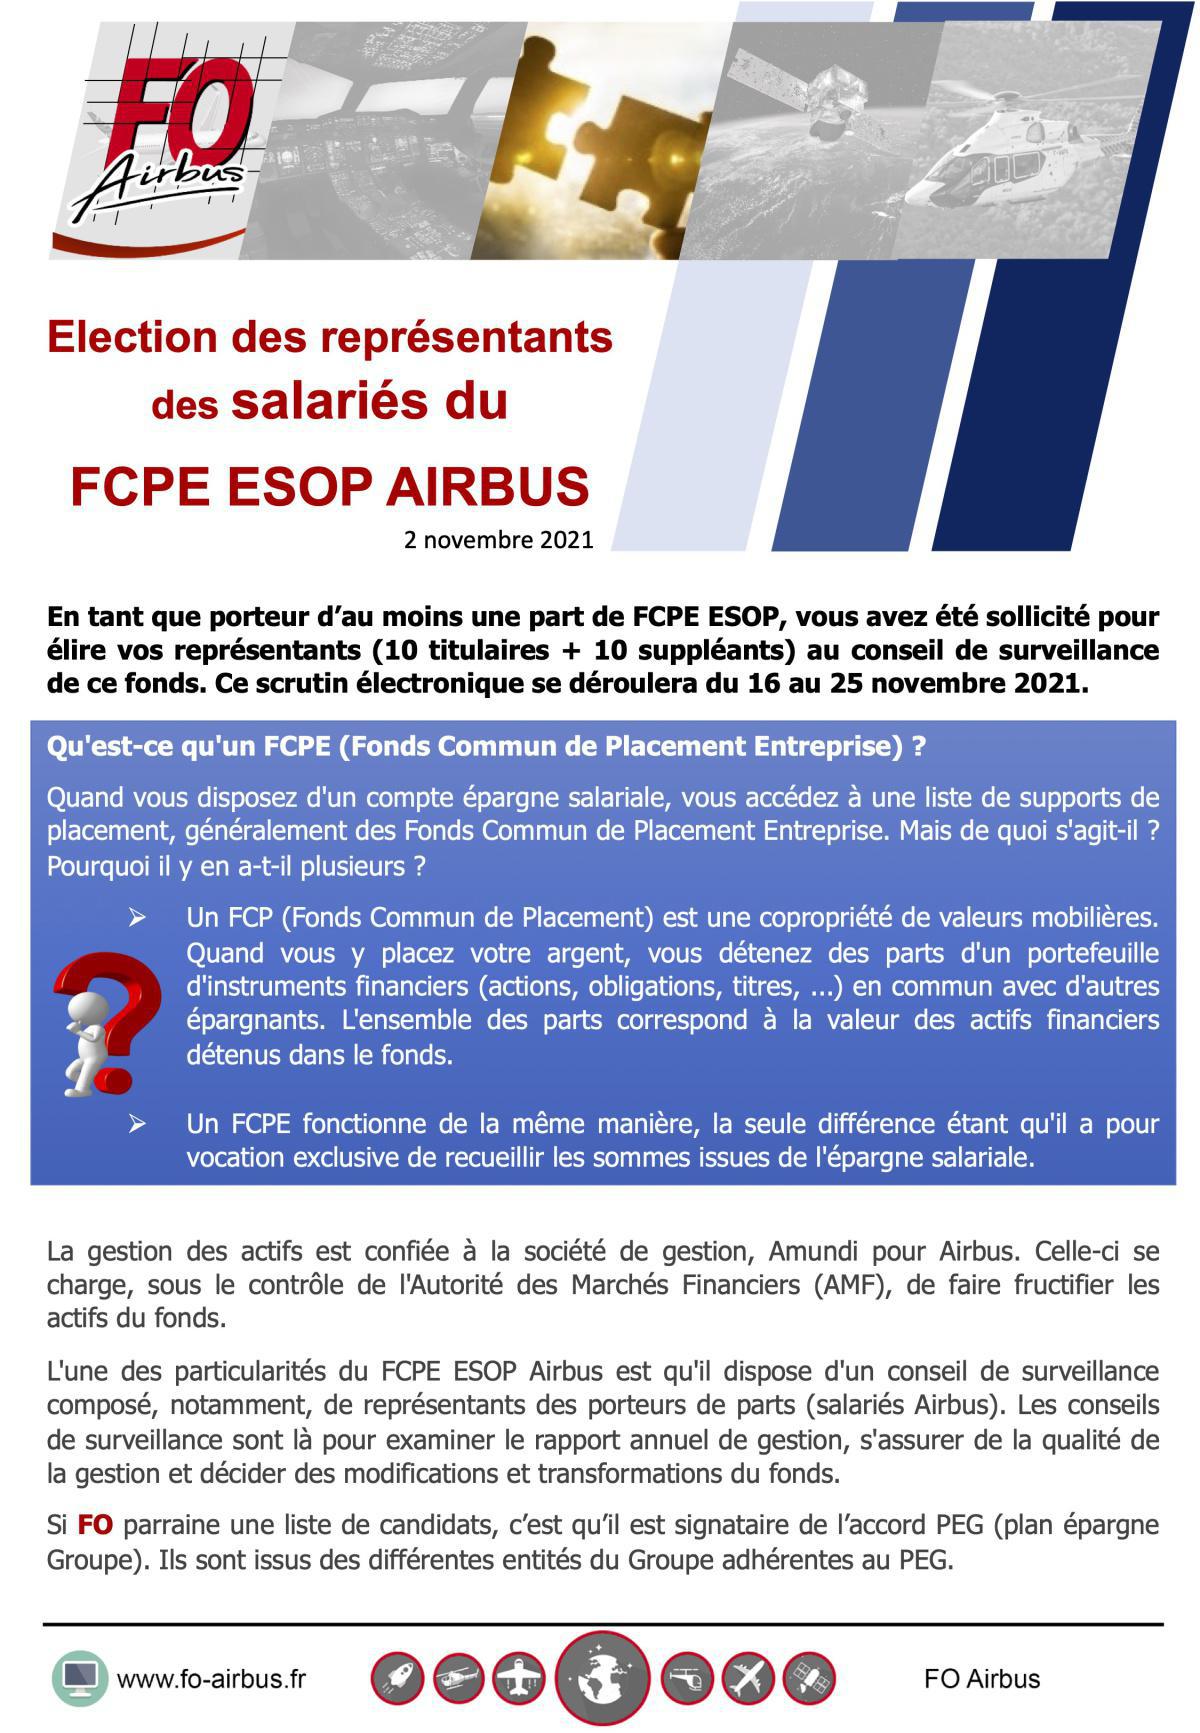 FCPE ESOP Airbus - Elections des représentants des salariés